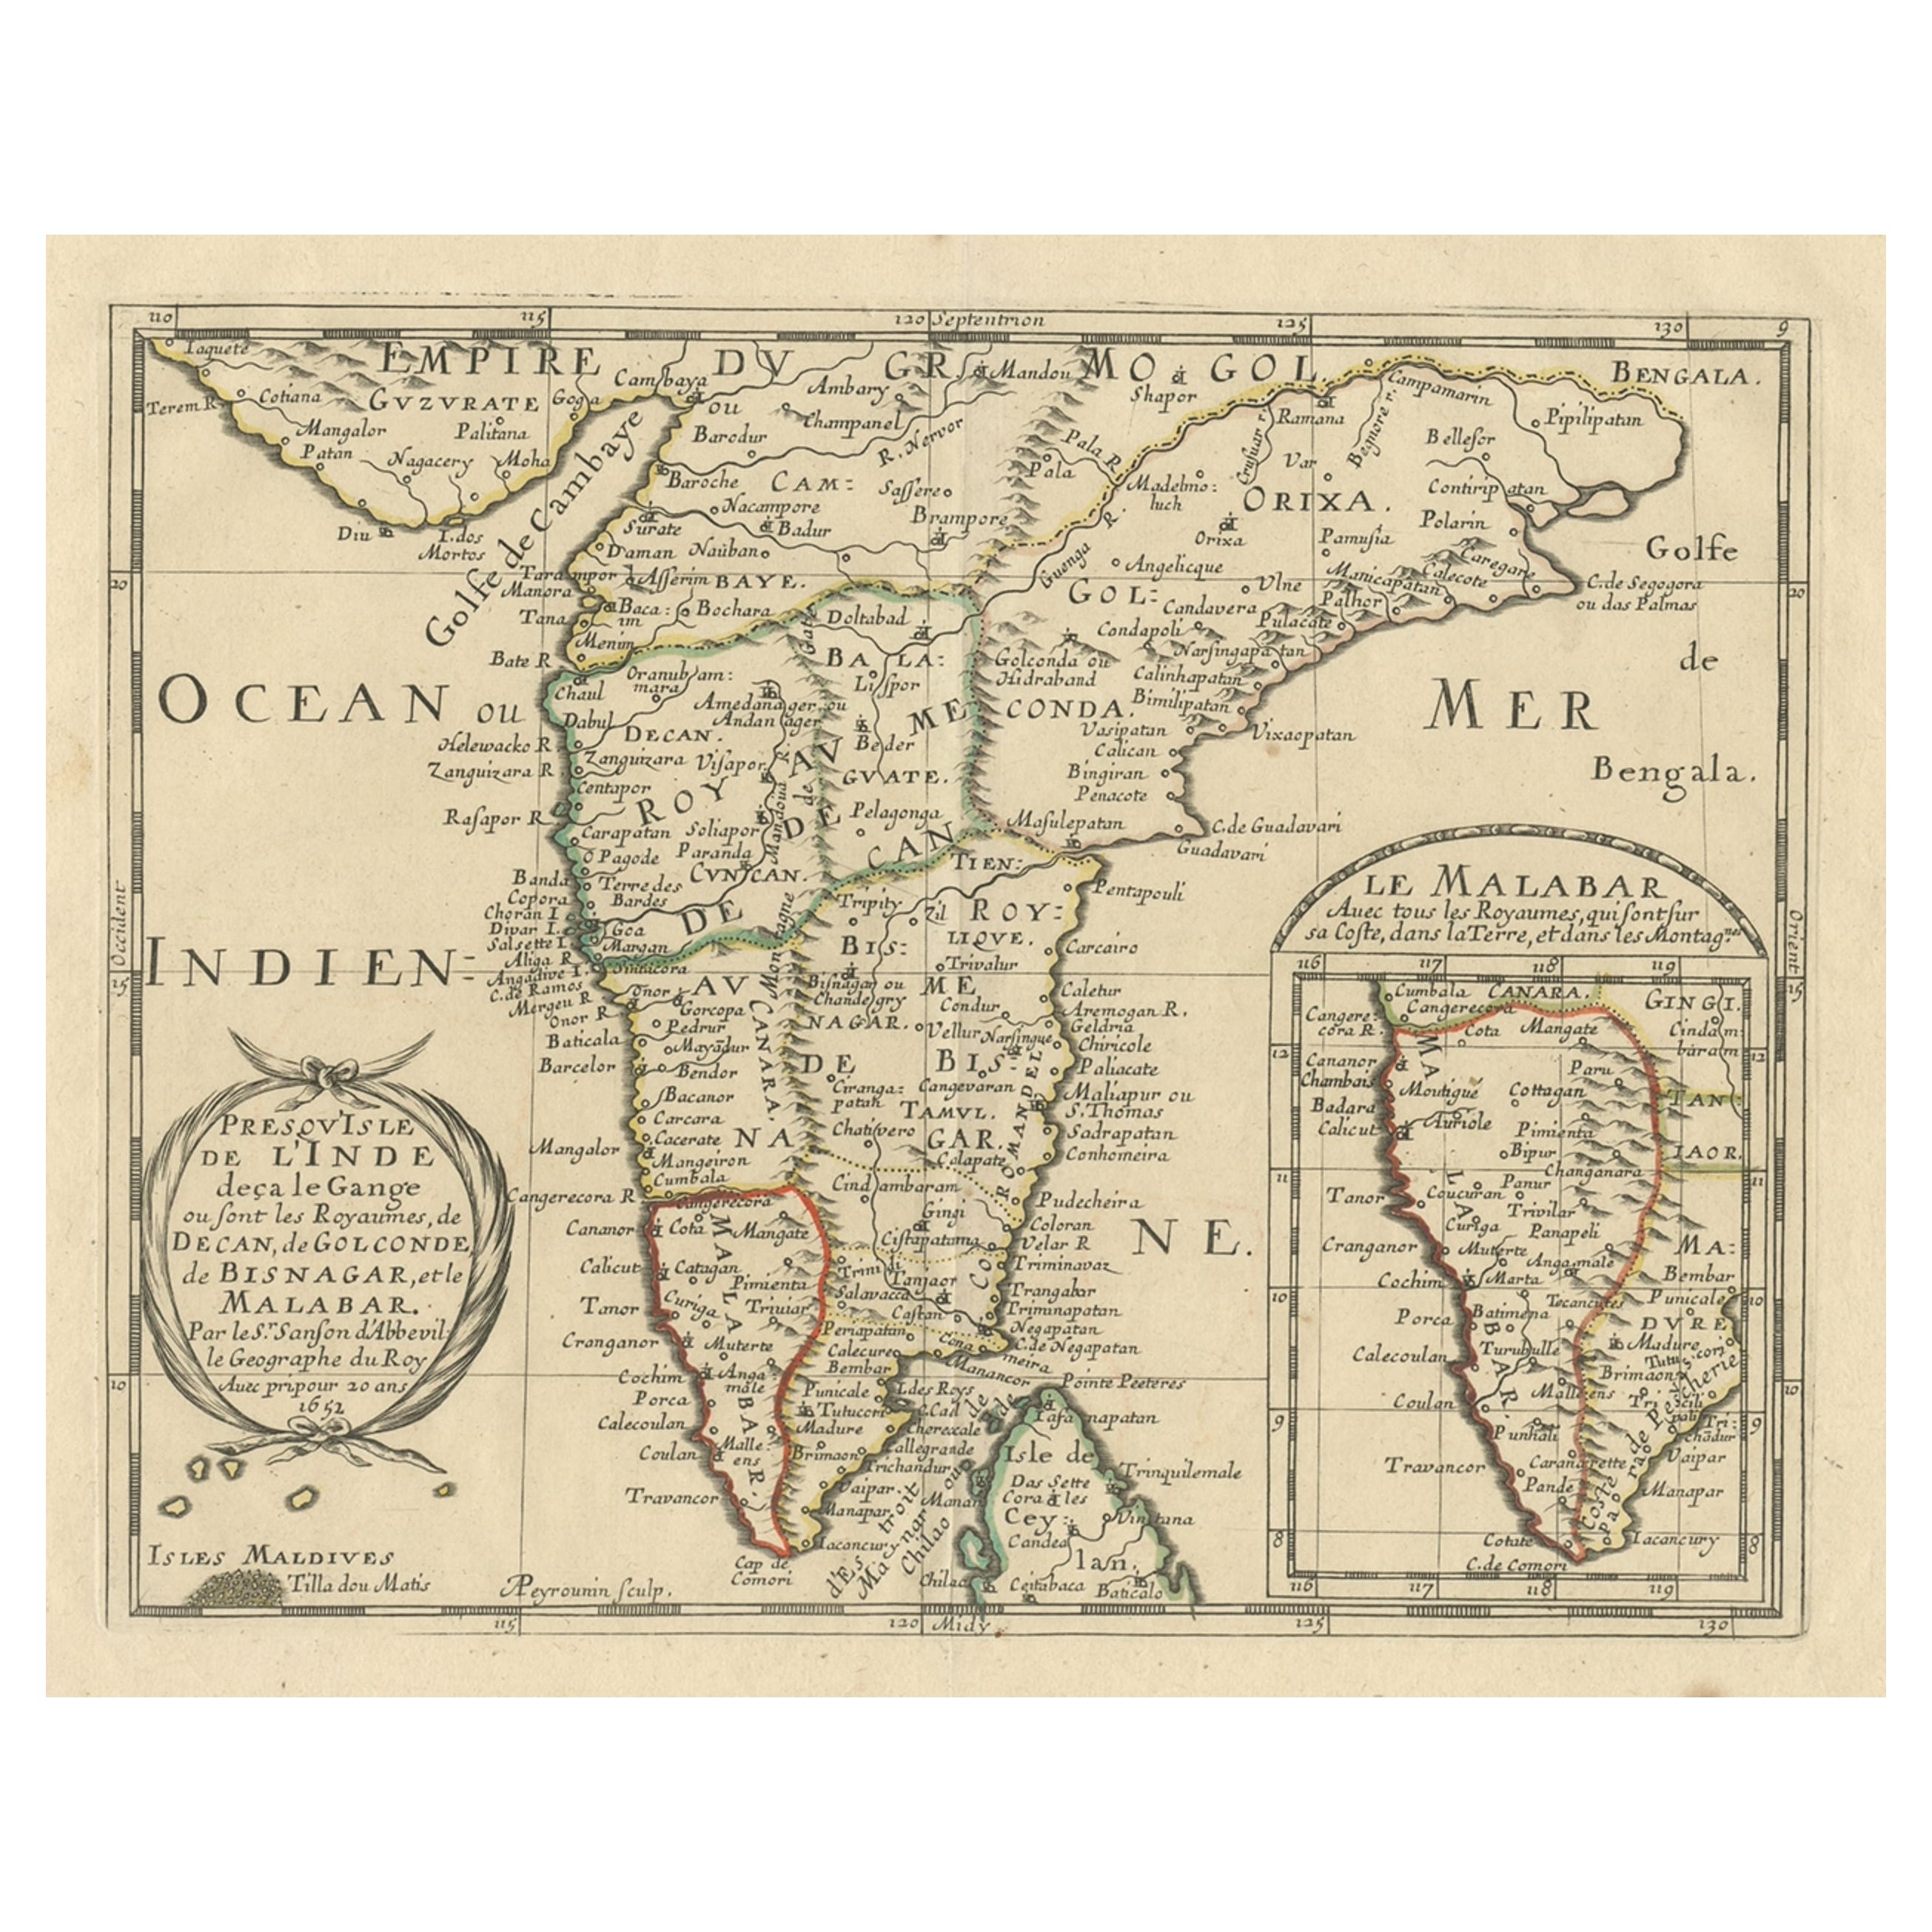 Original Antique Map showing Southern India, Northern Sri Lanka & Malabar, 1652